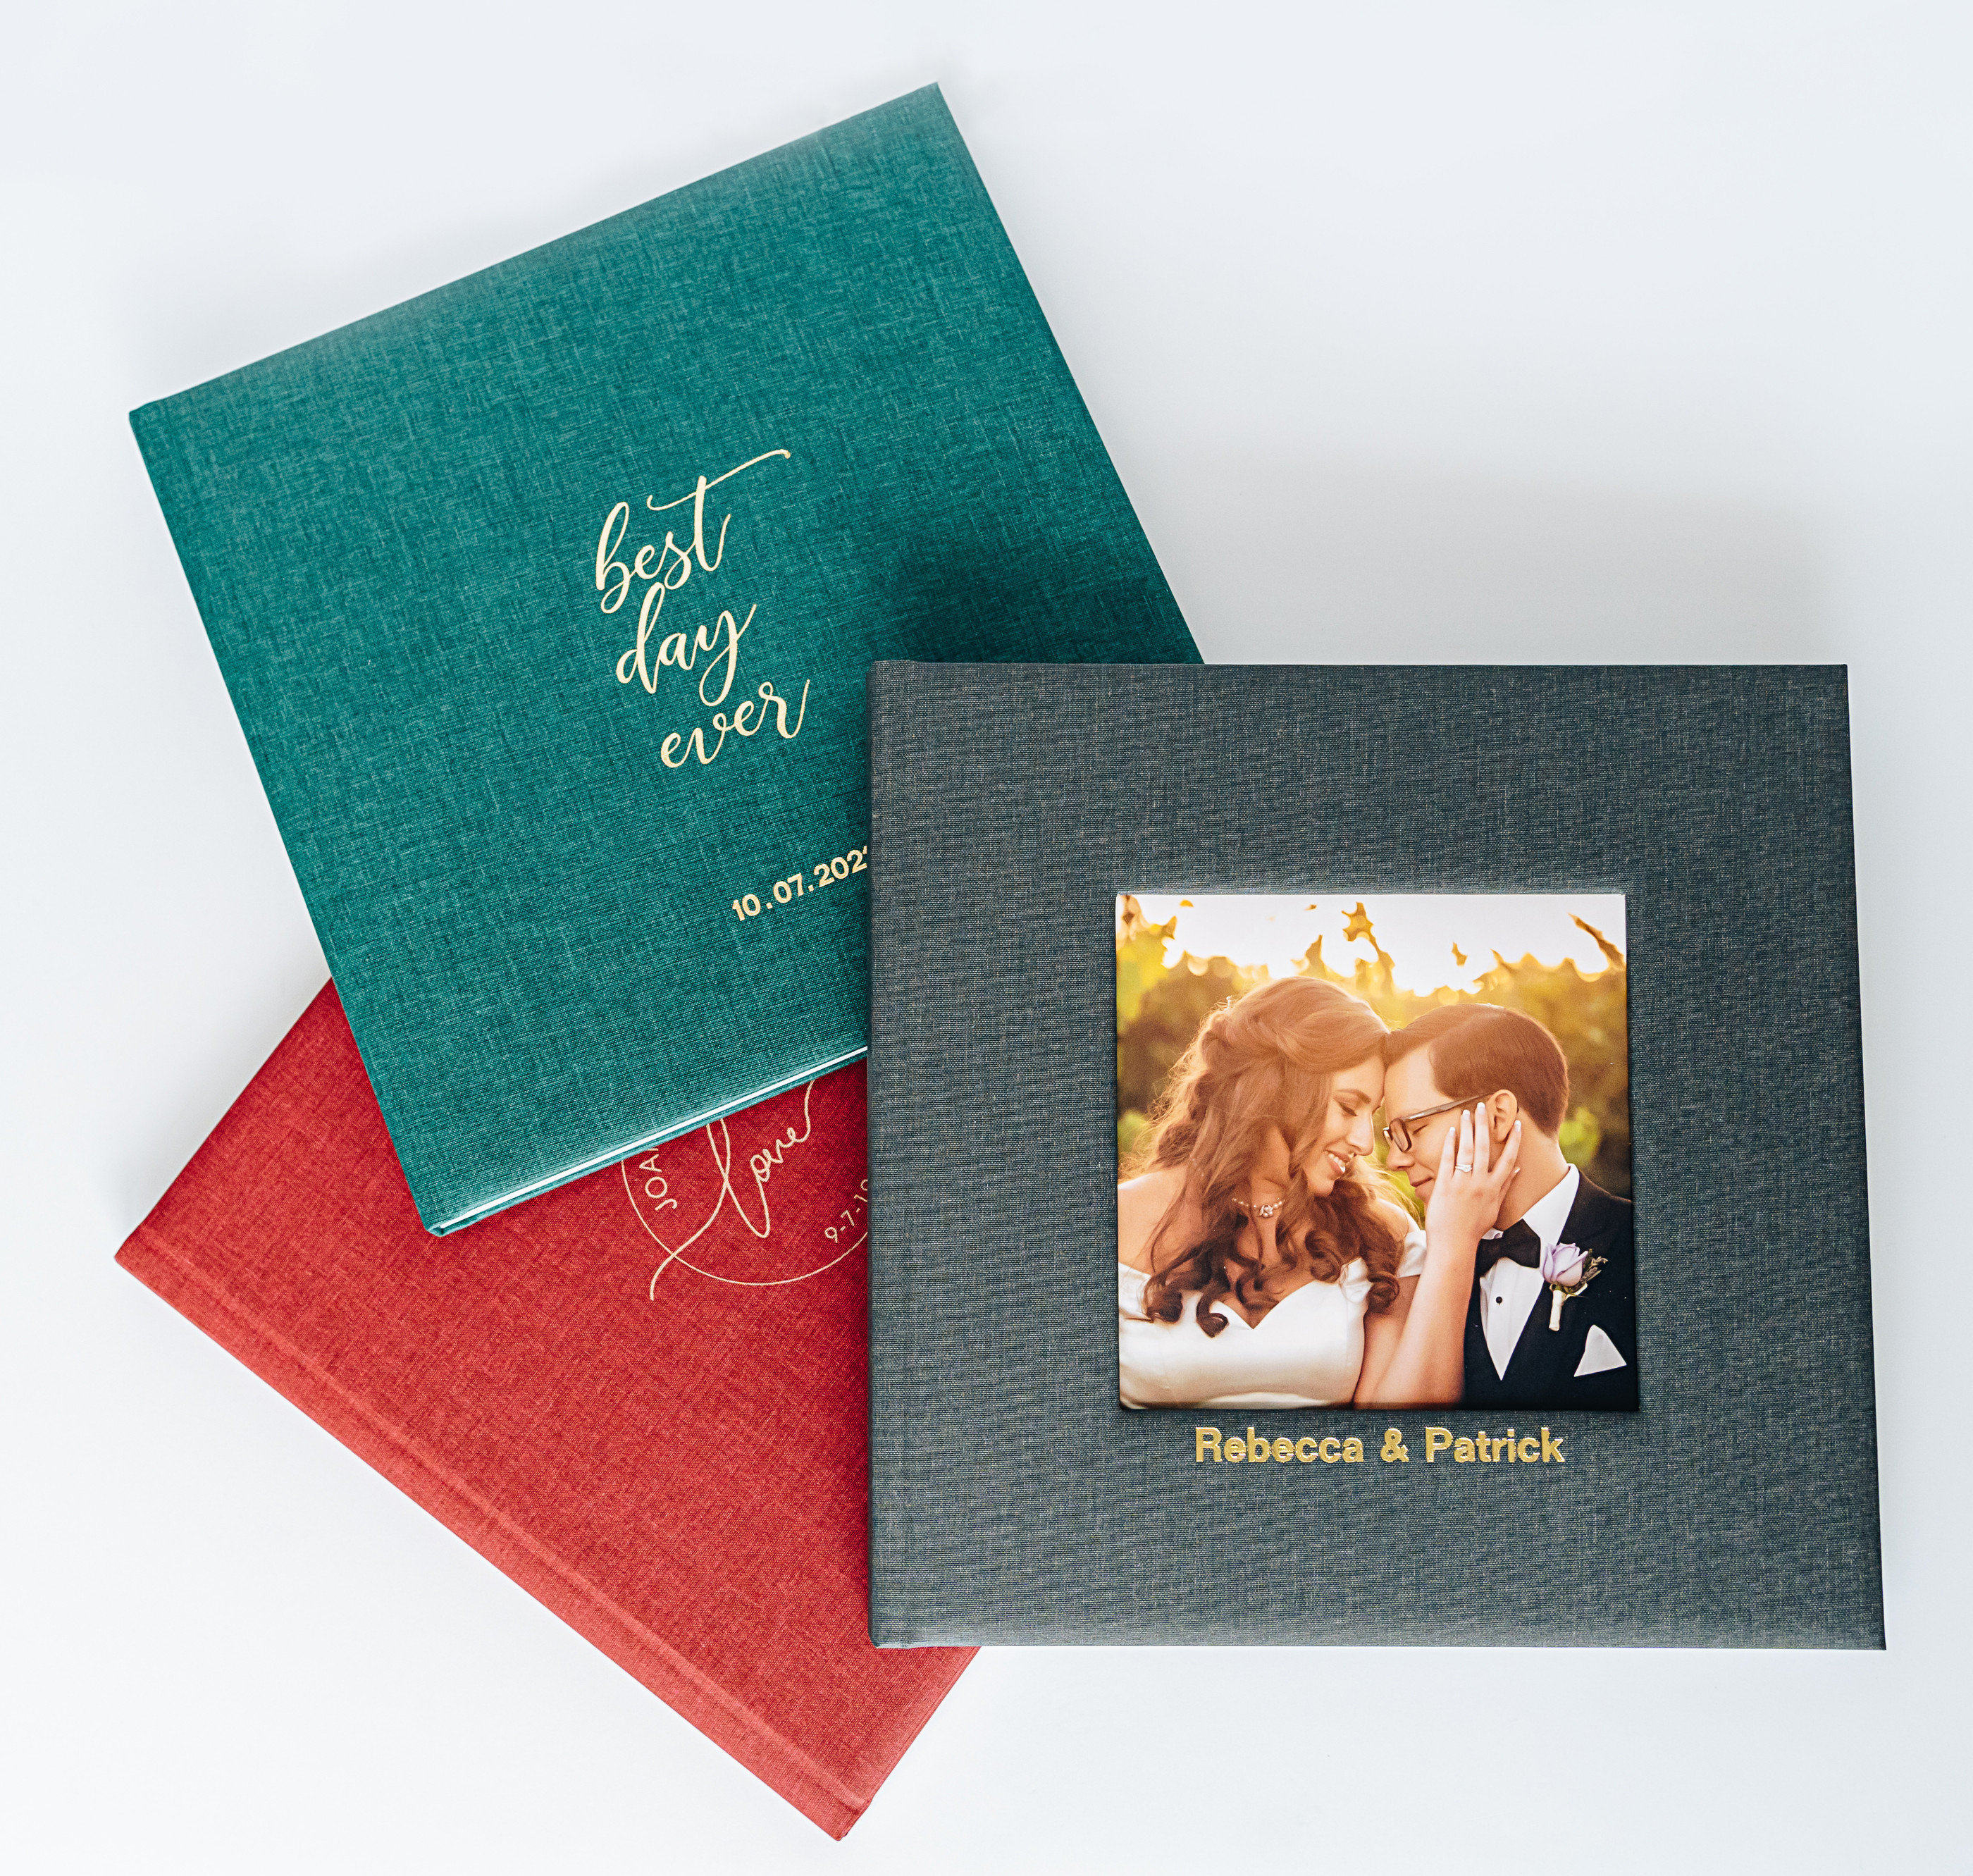 Bespoke wedding album covers